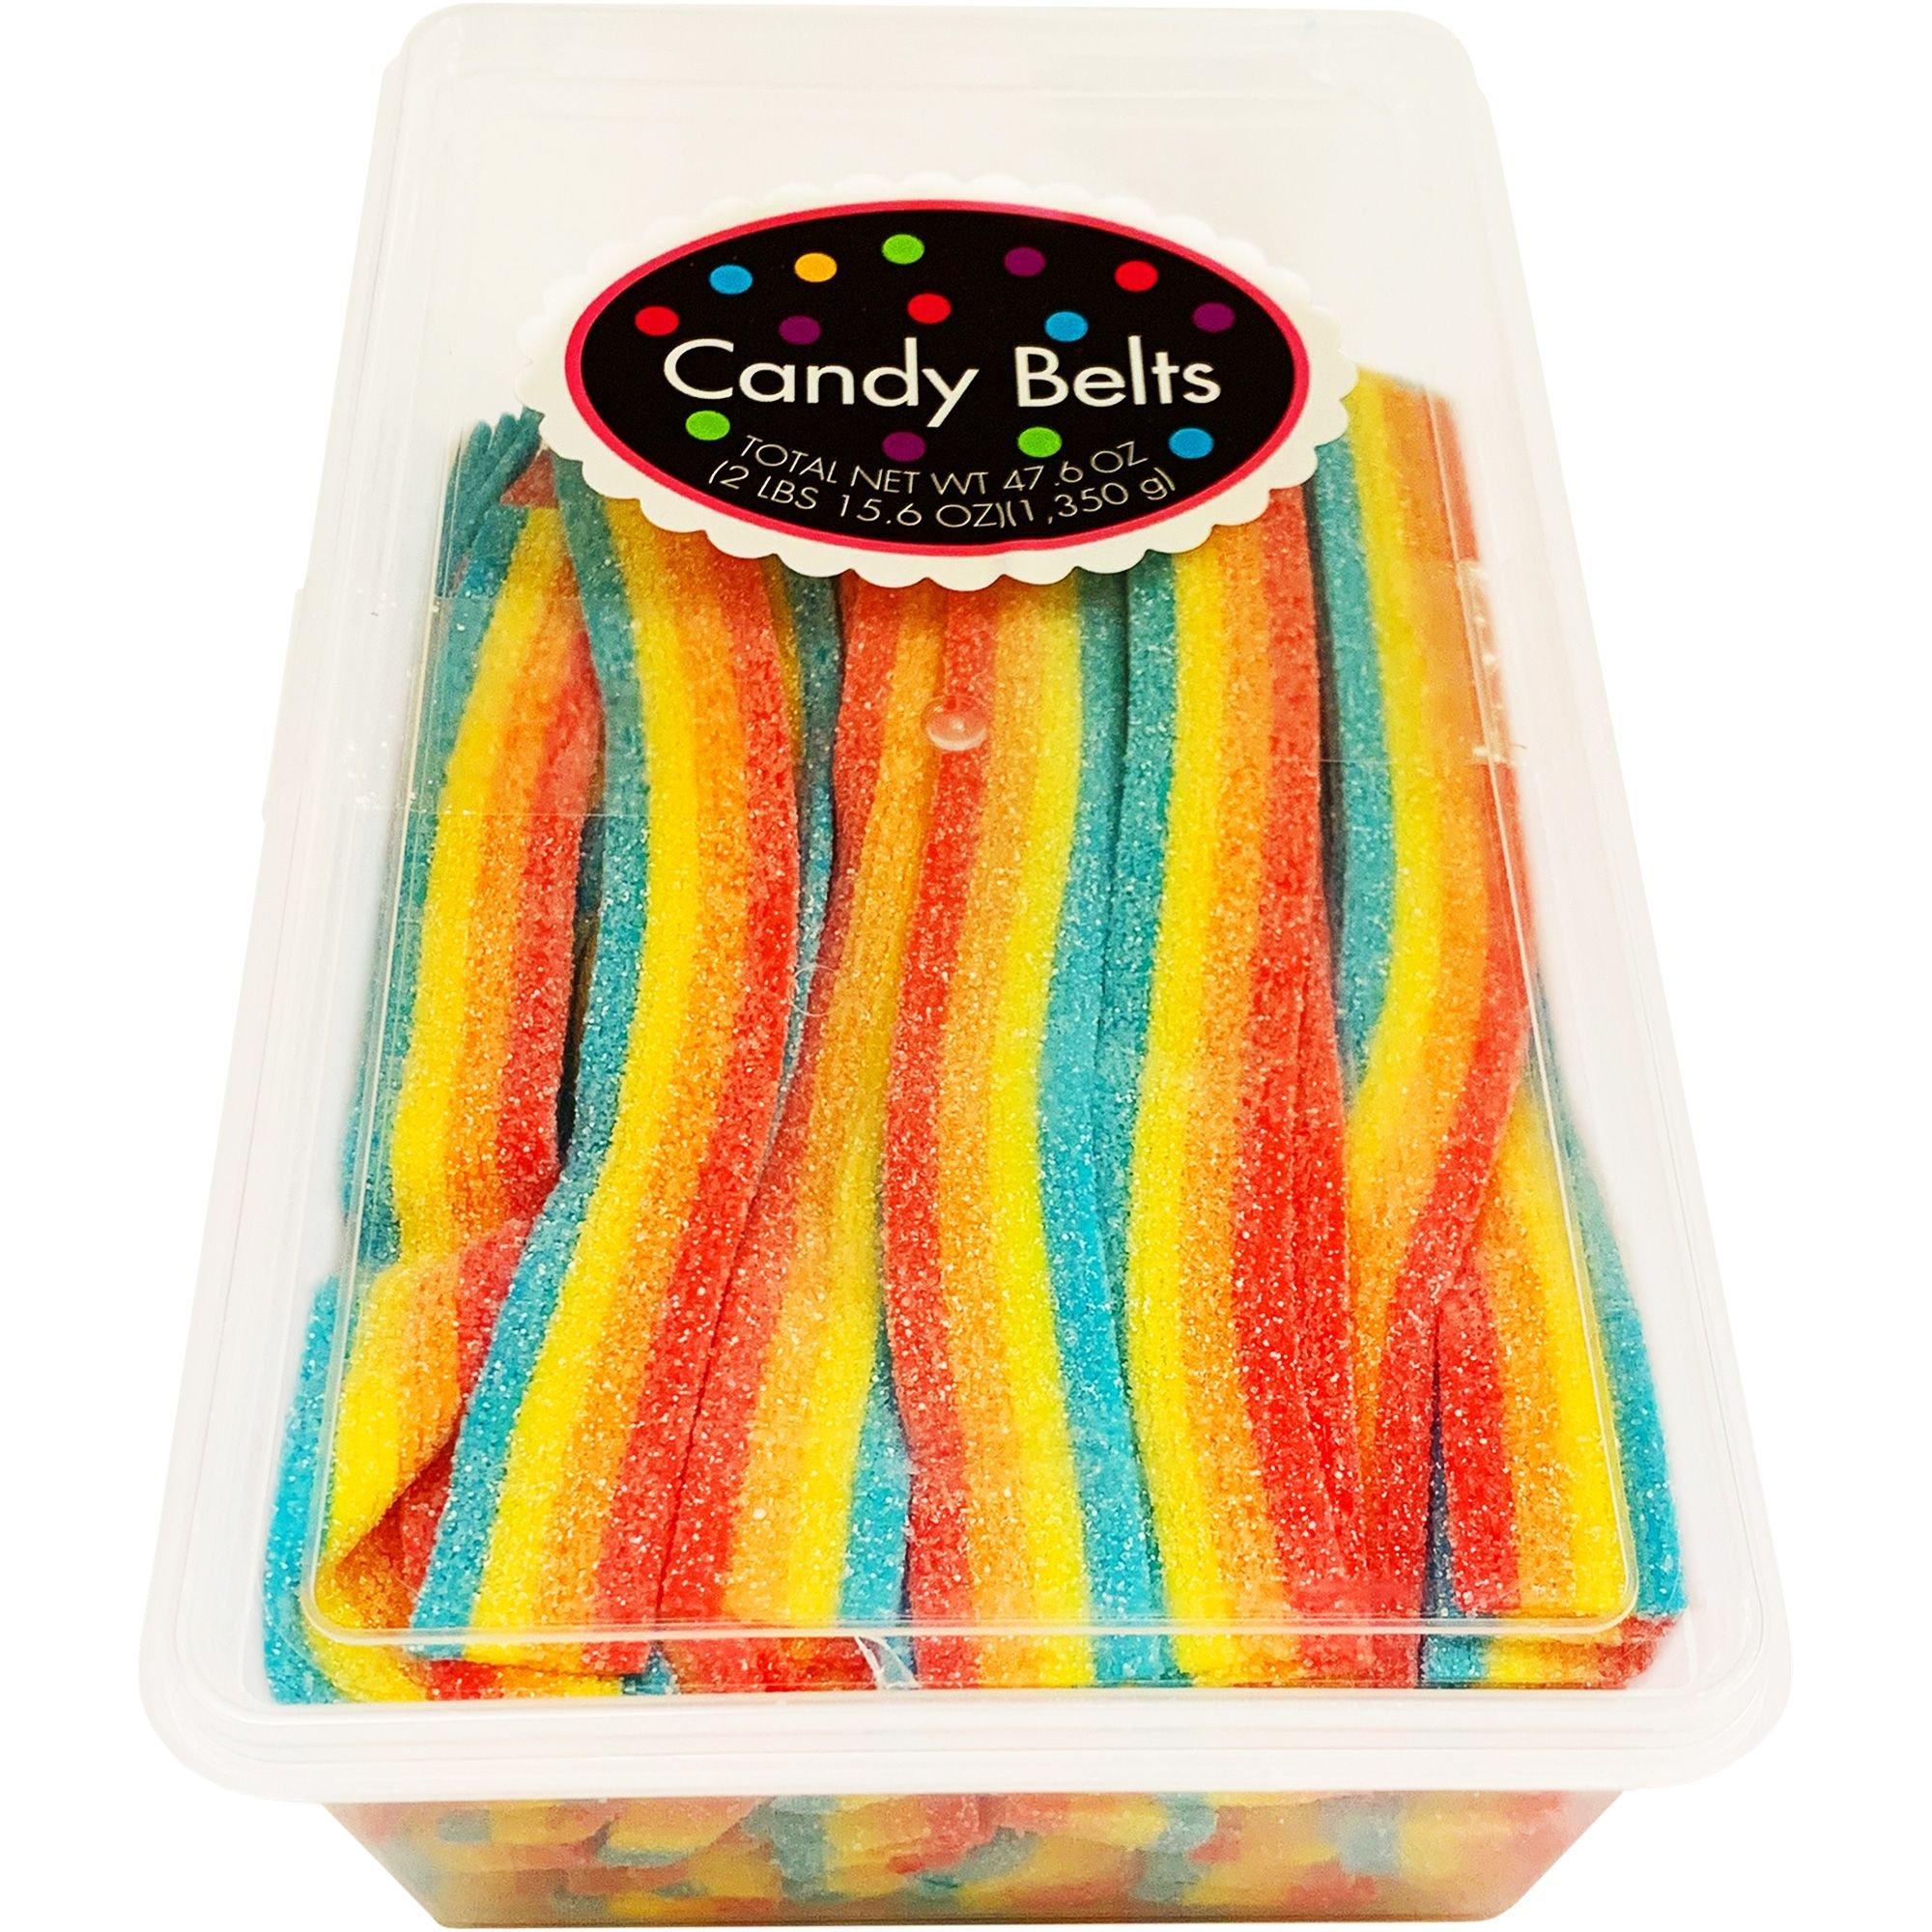 rainbow candy centerpieces